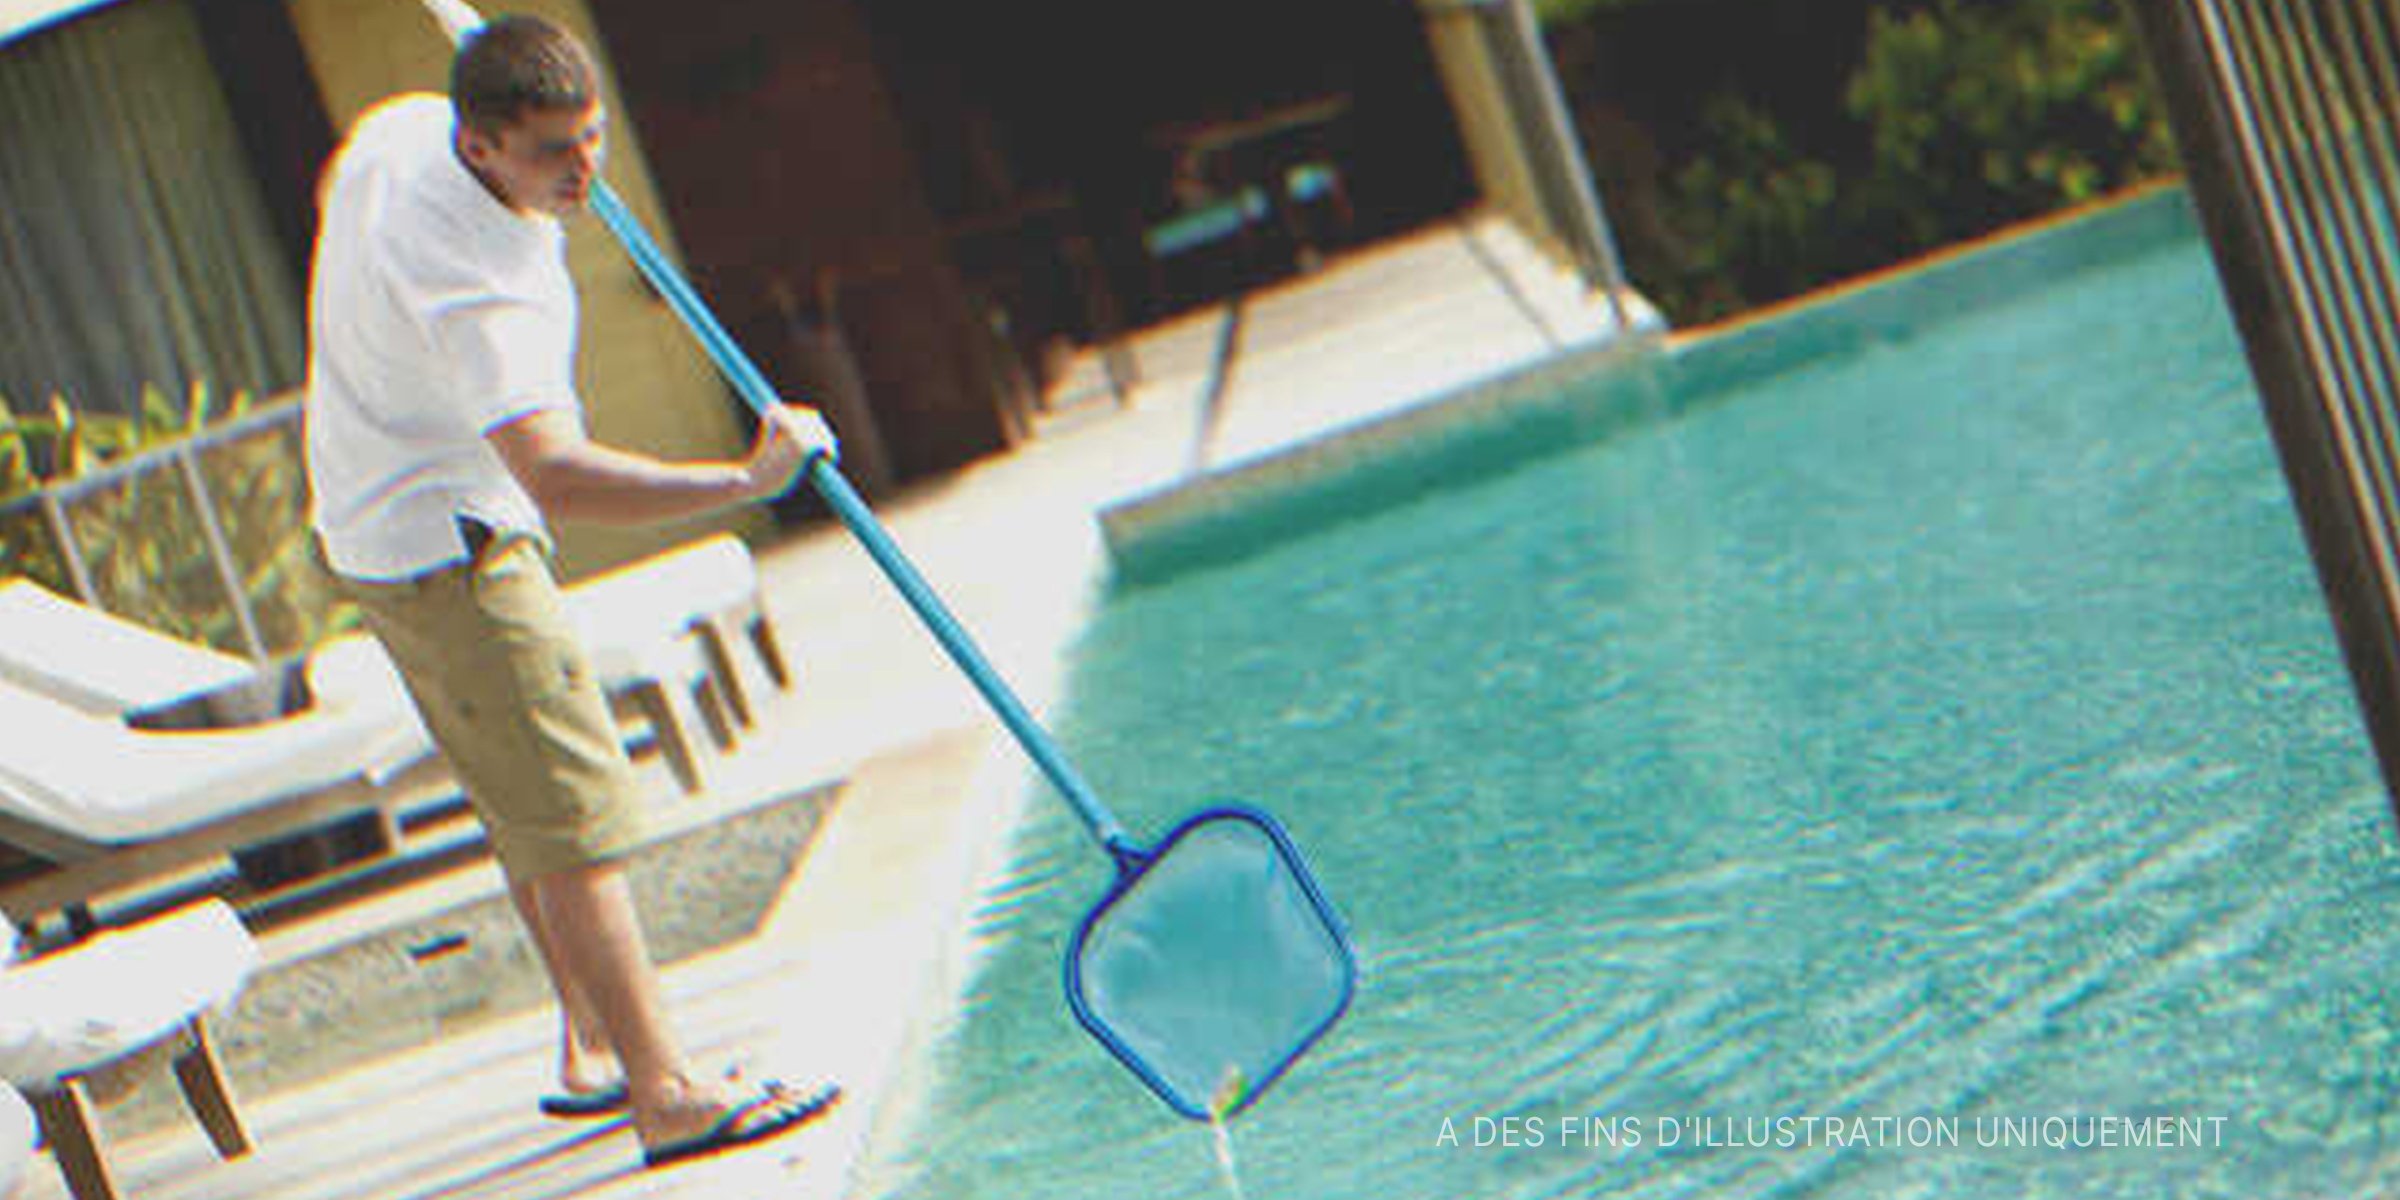 Un employé qui nettoie une piscine | Source : Shutterstock